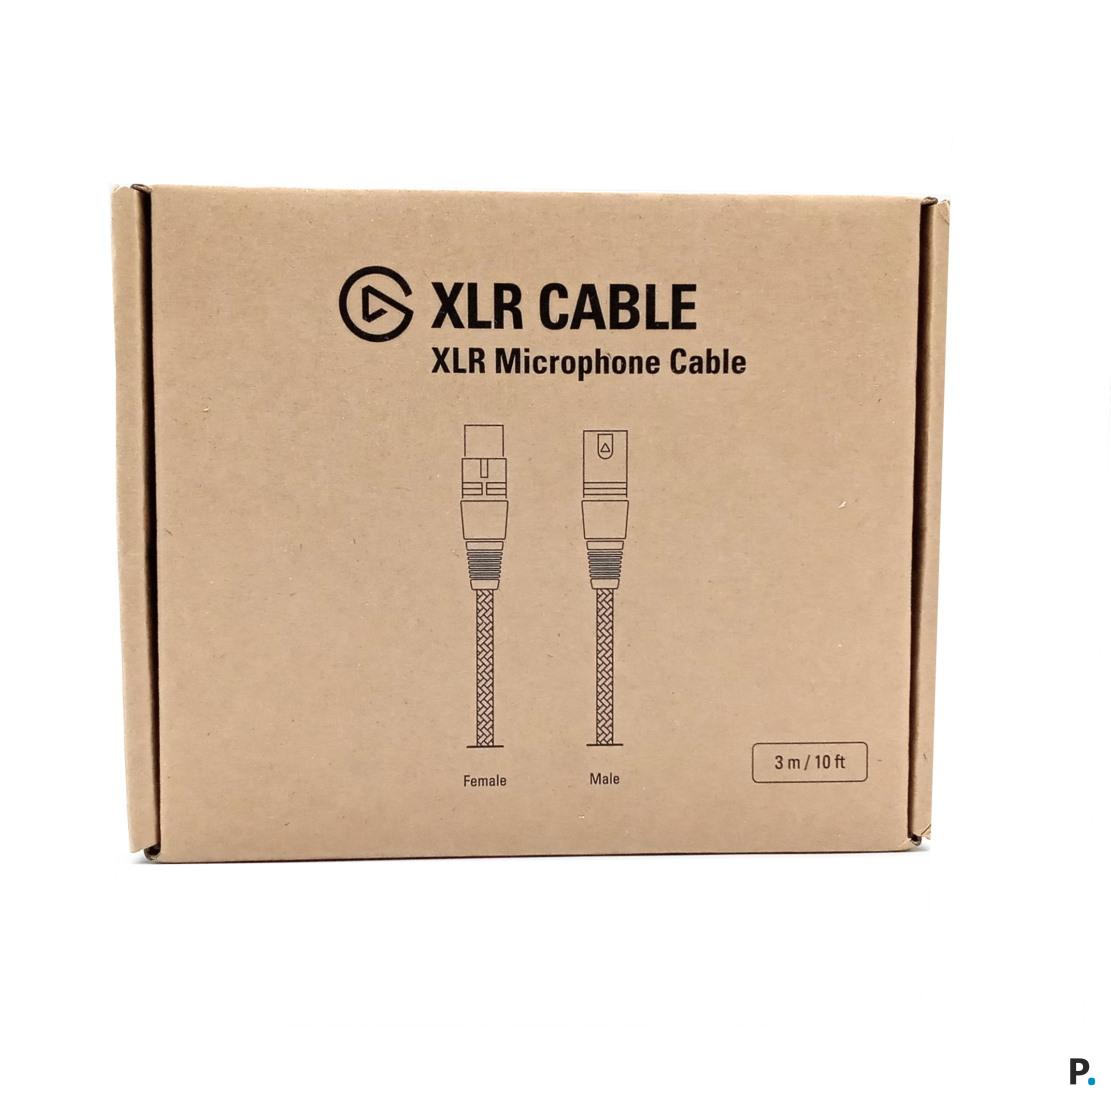 1 Elgato XLR Cable Review